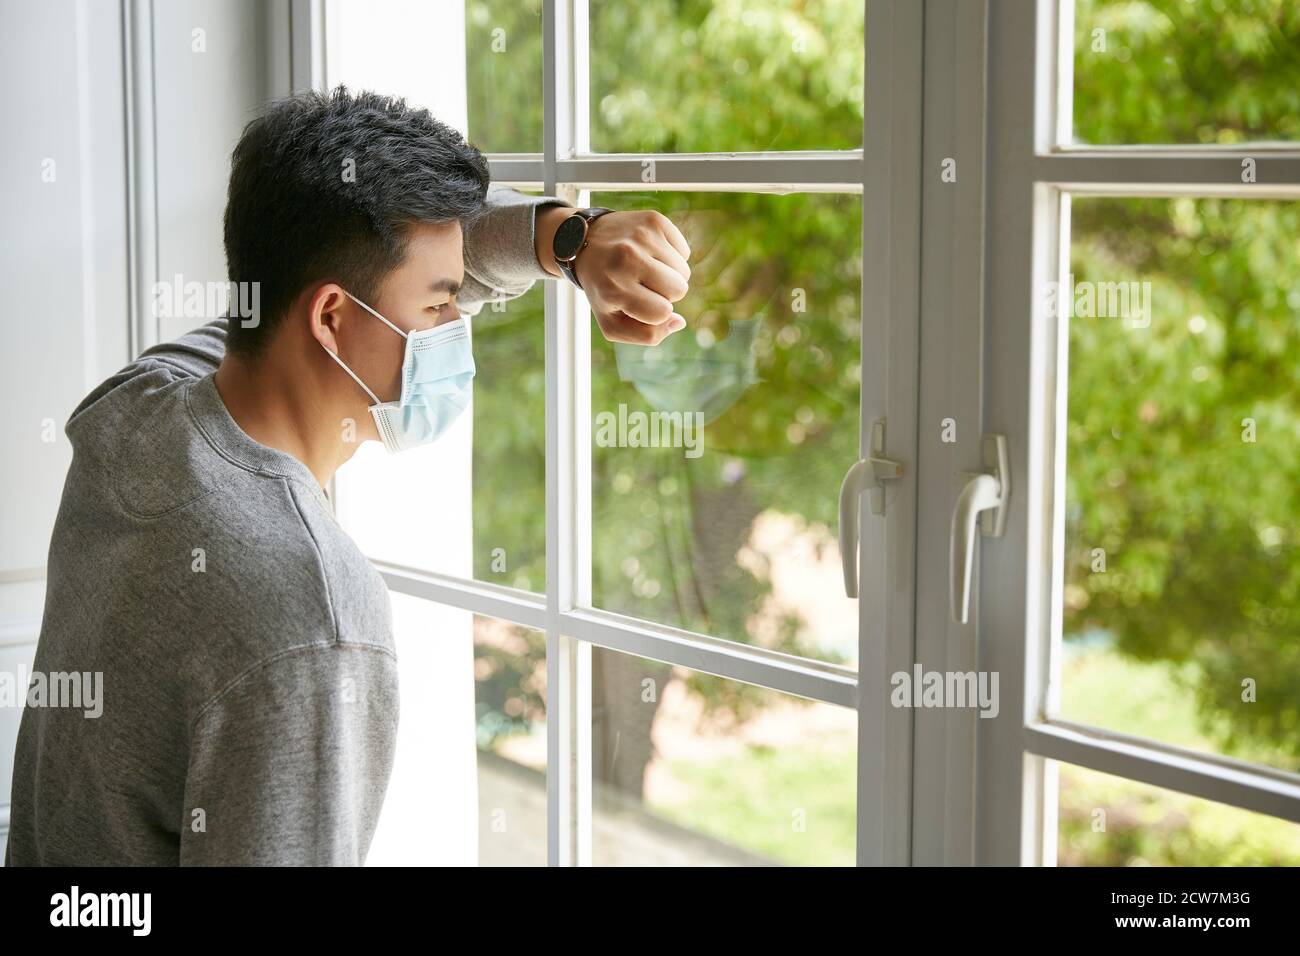 HD wallpaper: man near glass window pane, man staring out a window